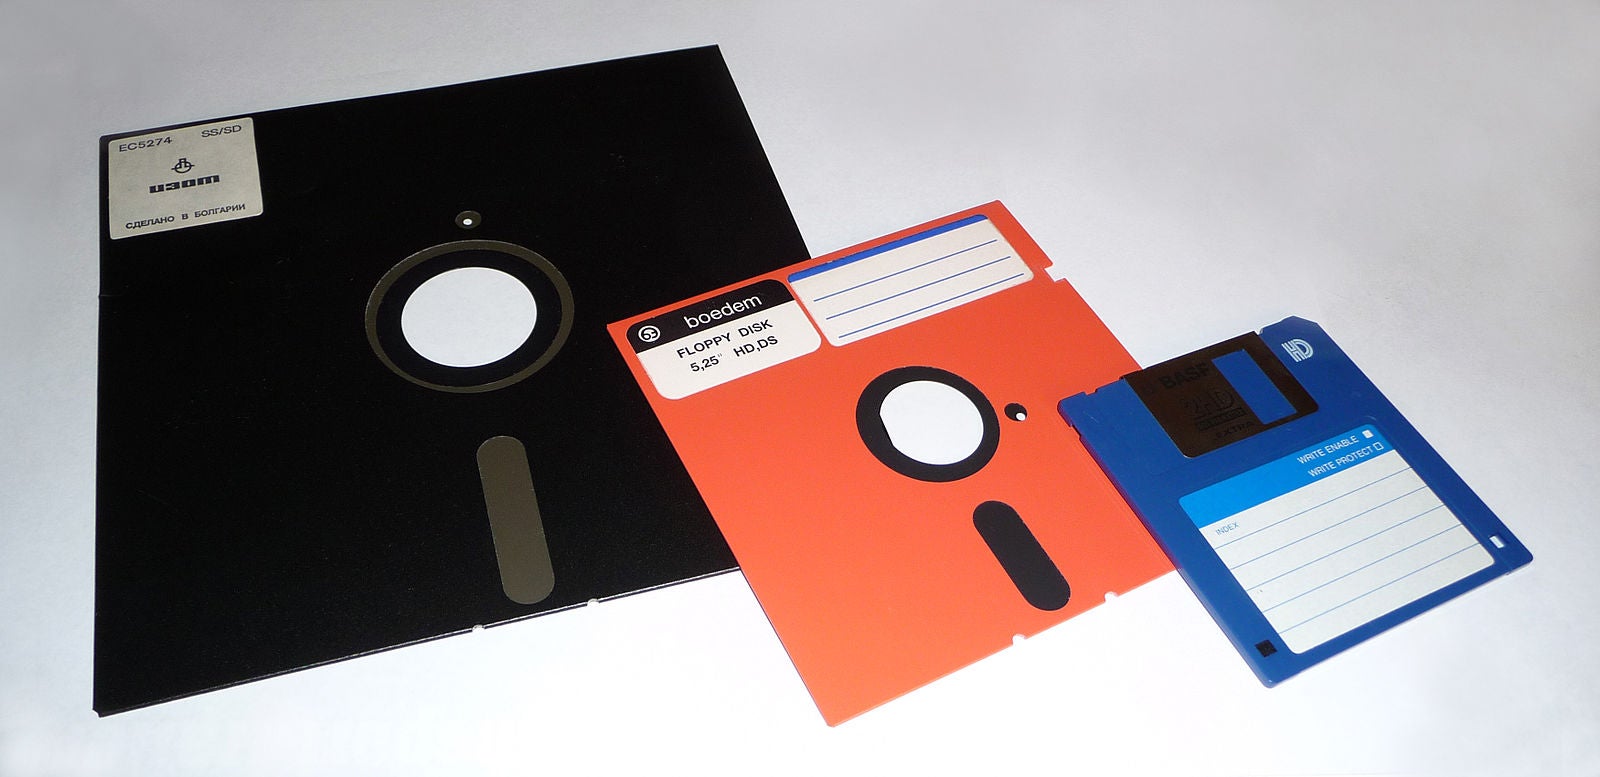 Floppy disks (Courtesy Wikimedia)